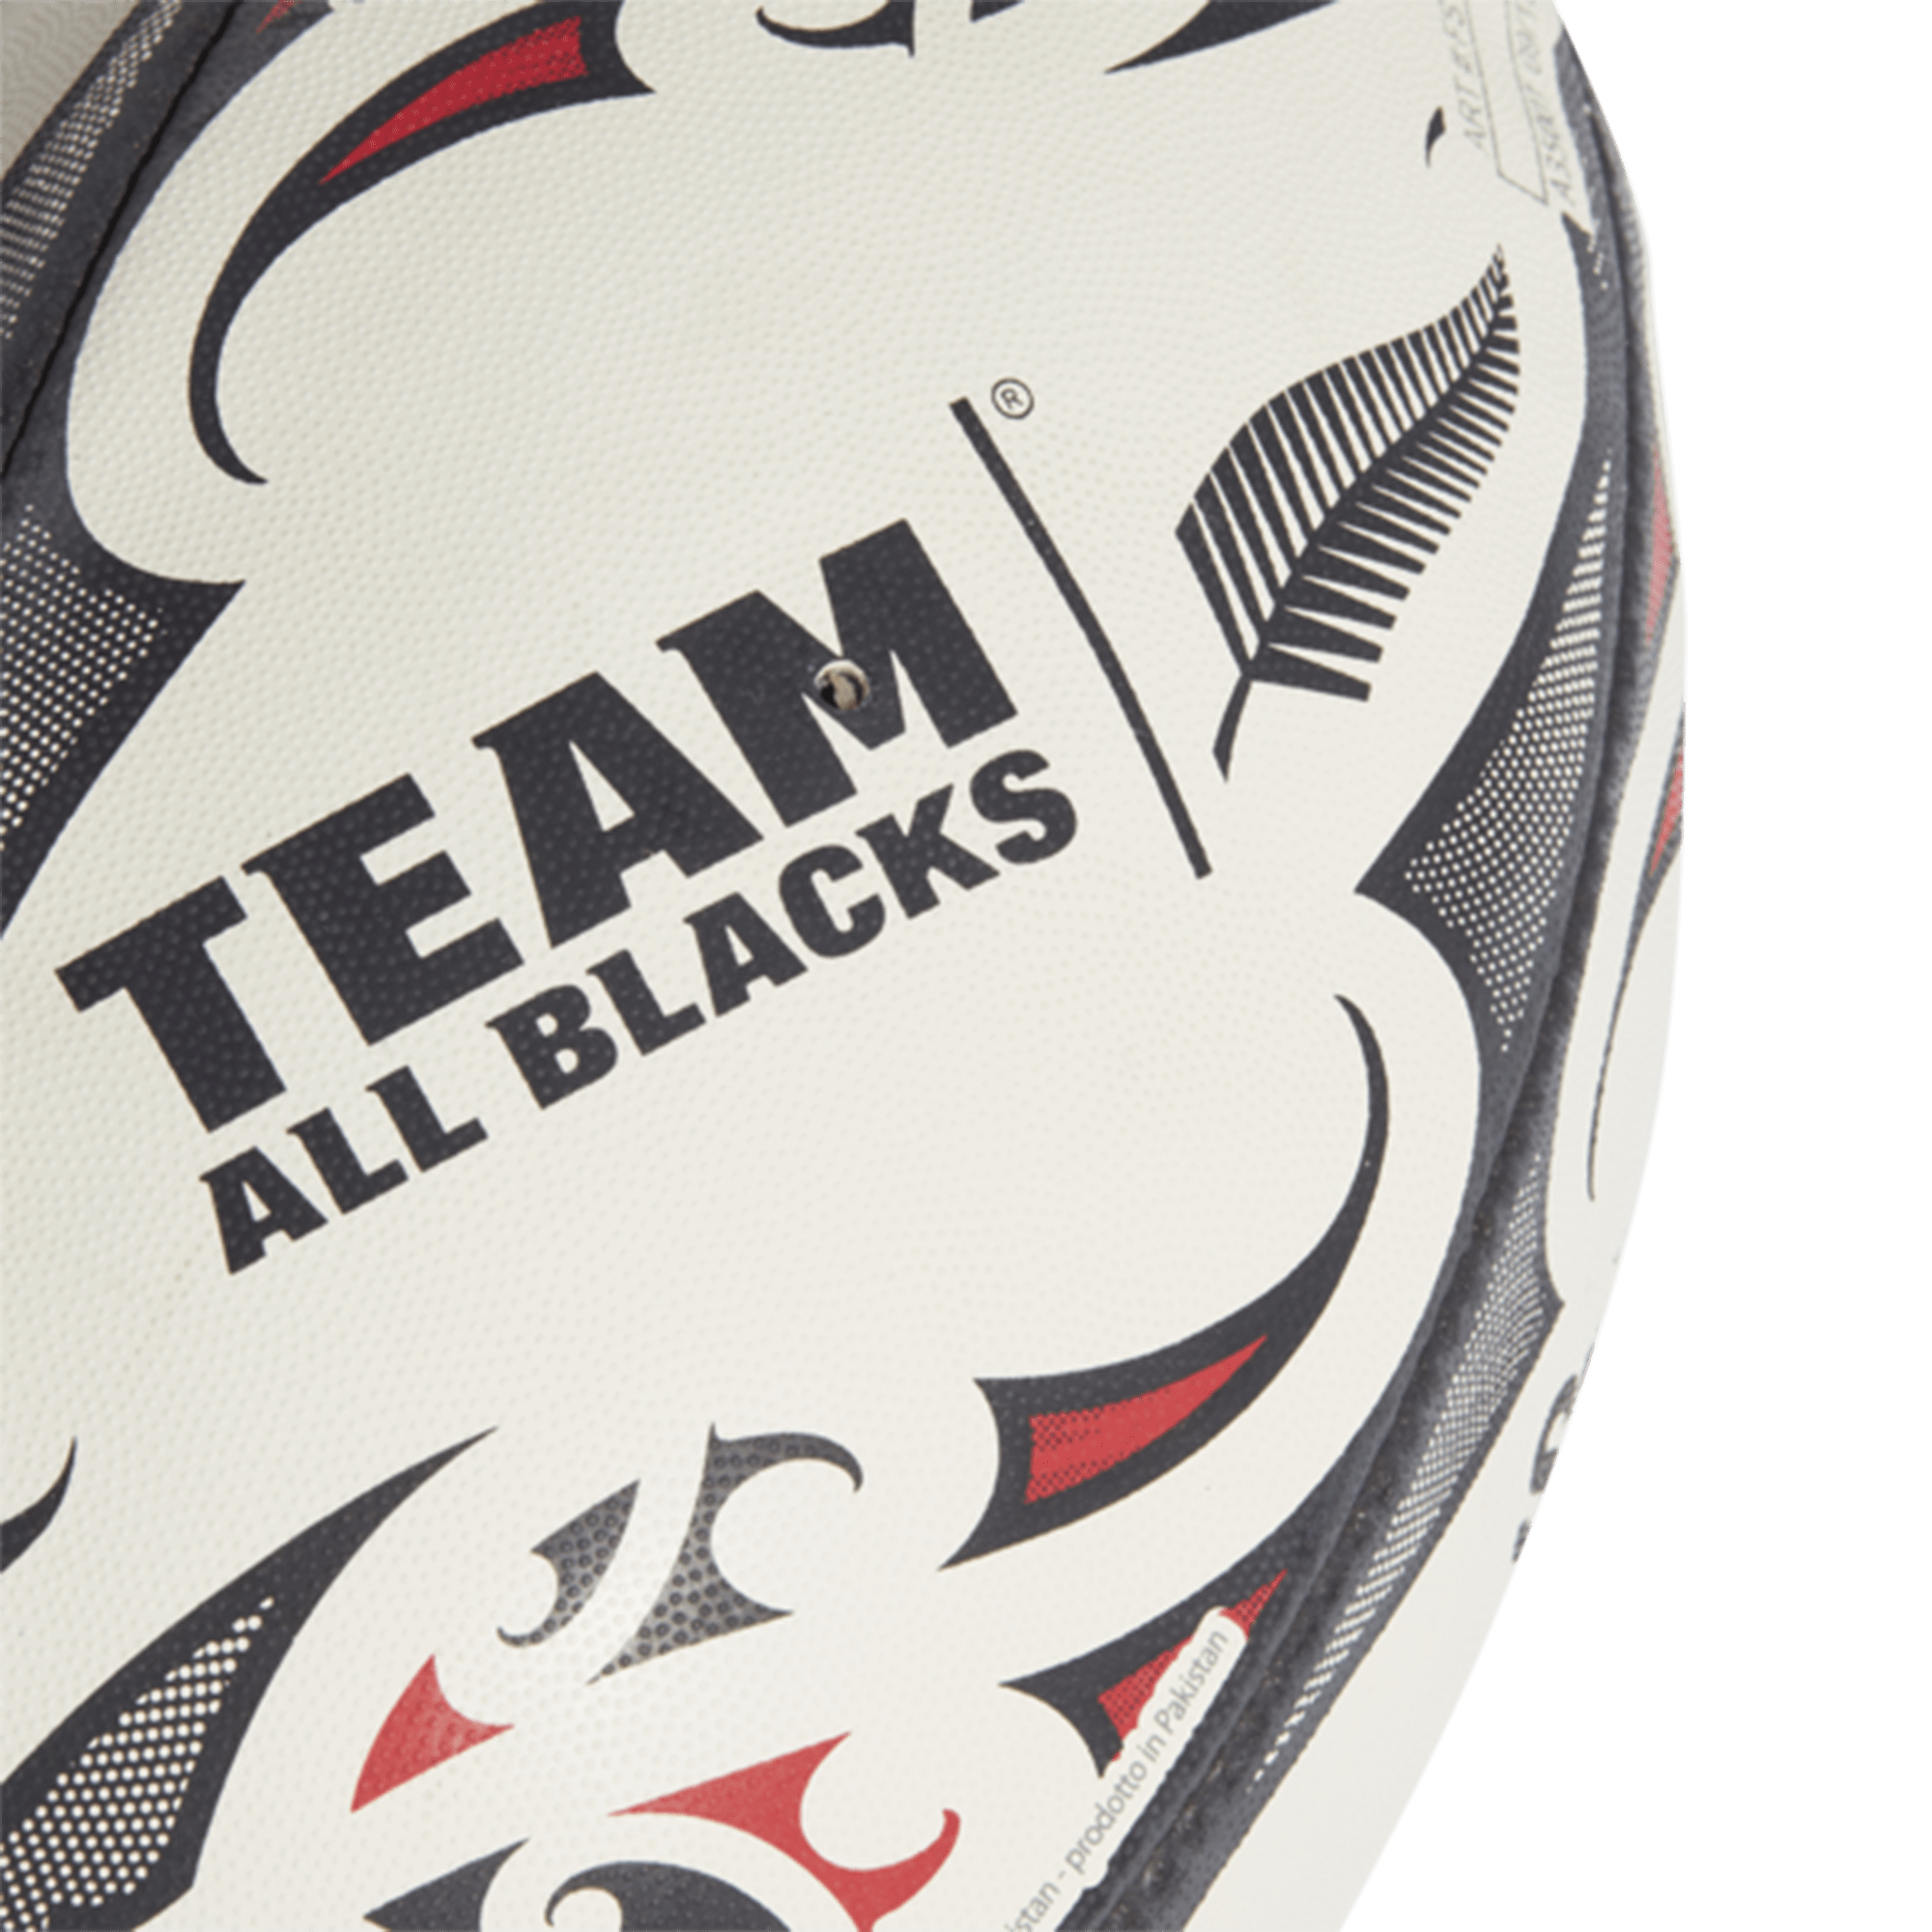 adidas, All Blacks Rugby Ball Mens, White